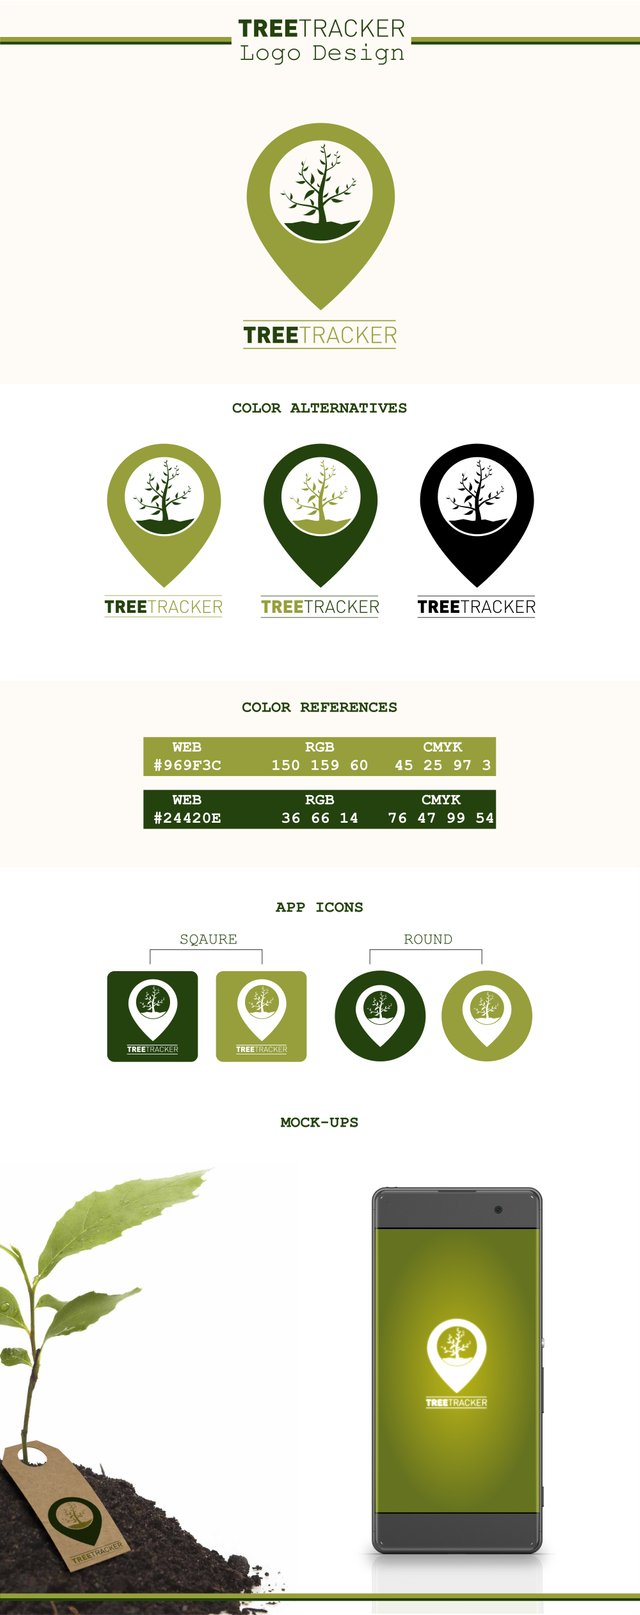 TreeTracker Logo Design-02.jpg